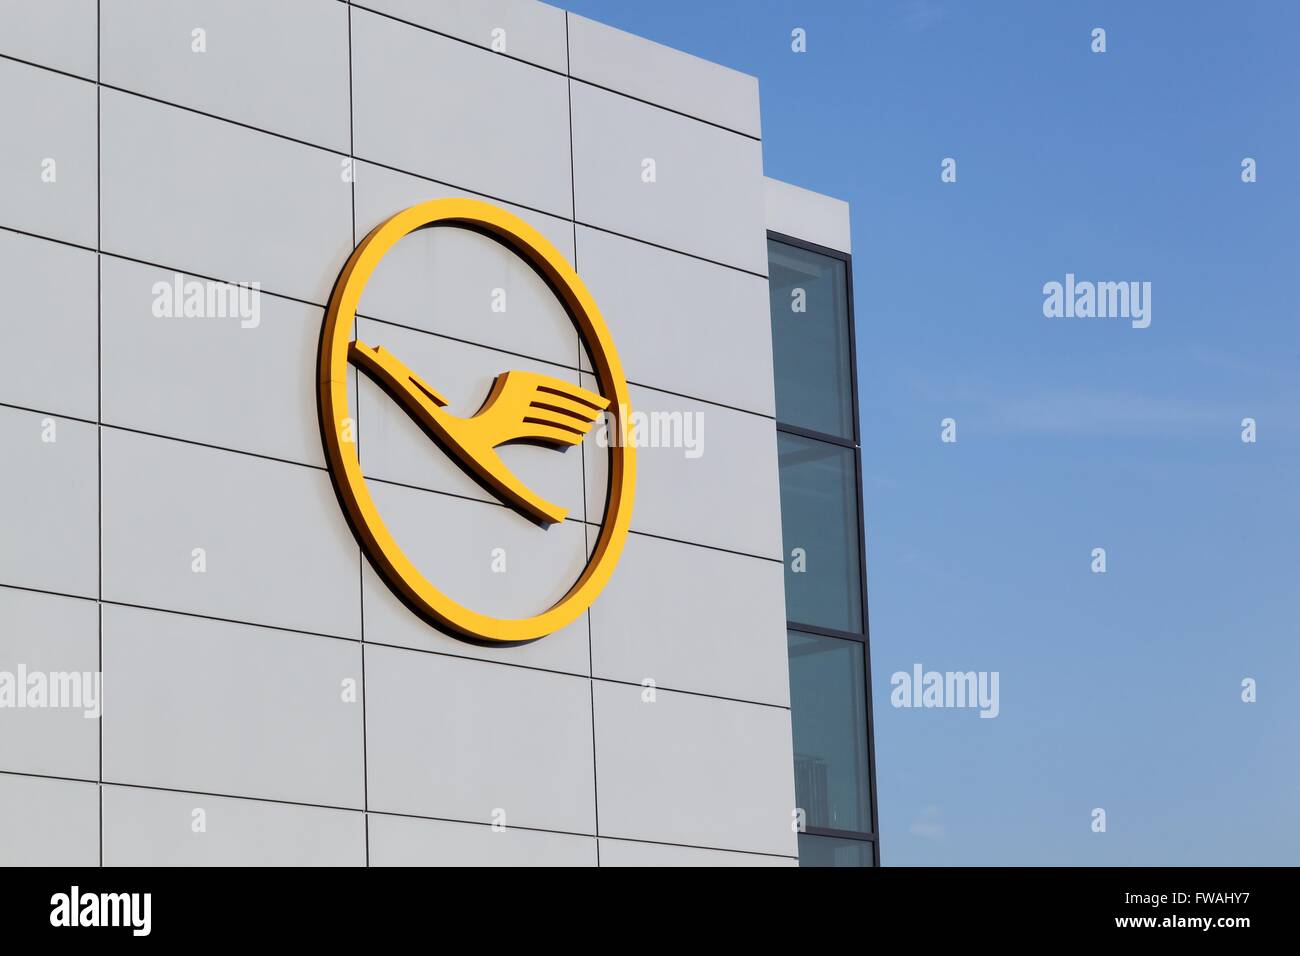 Lufthansa logo on wall at Frankfurt airport Stock Photo